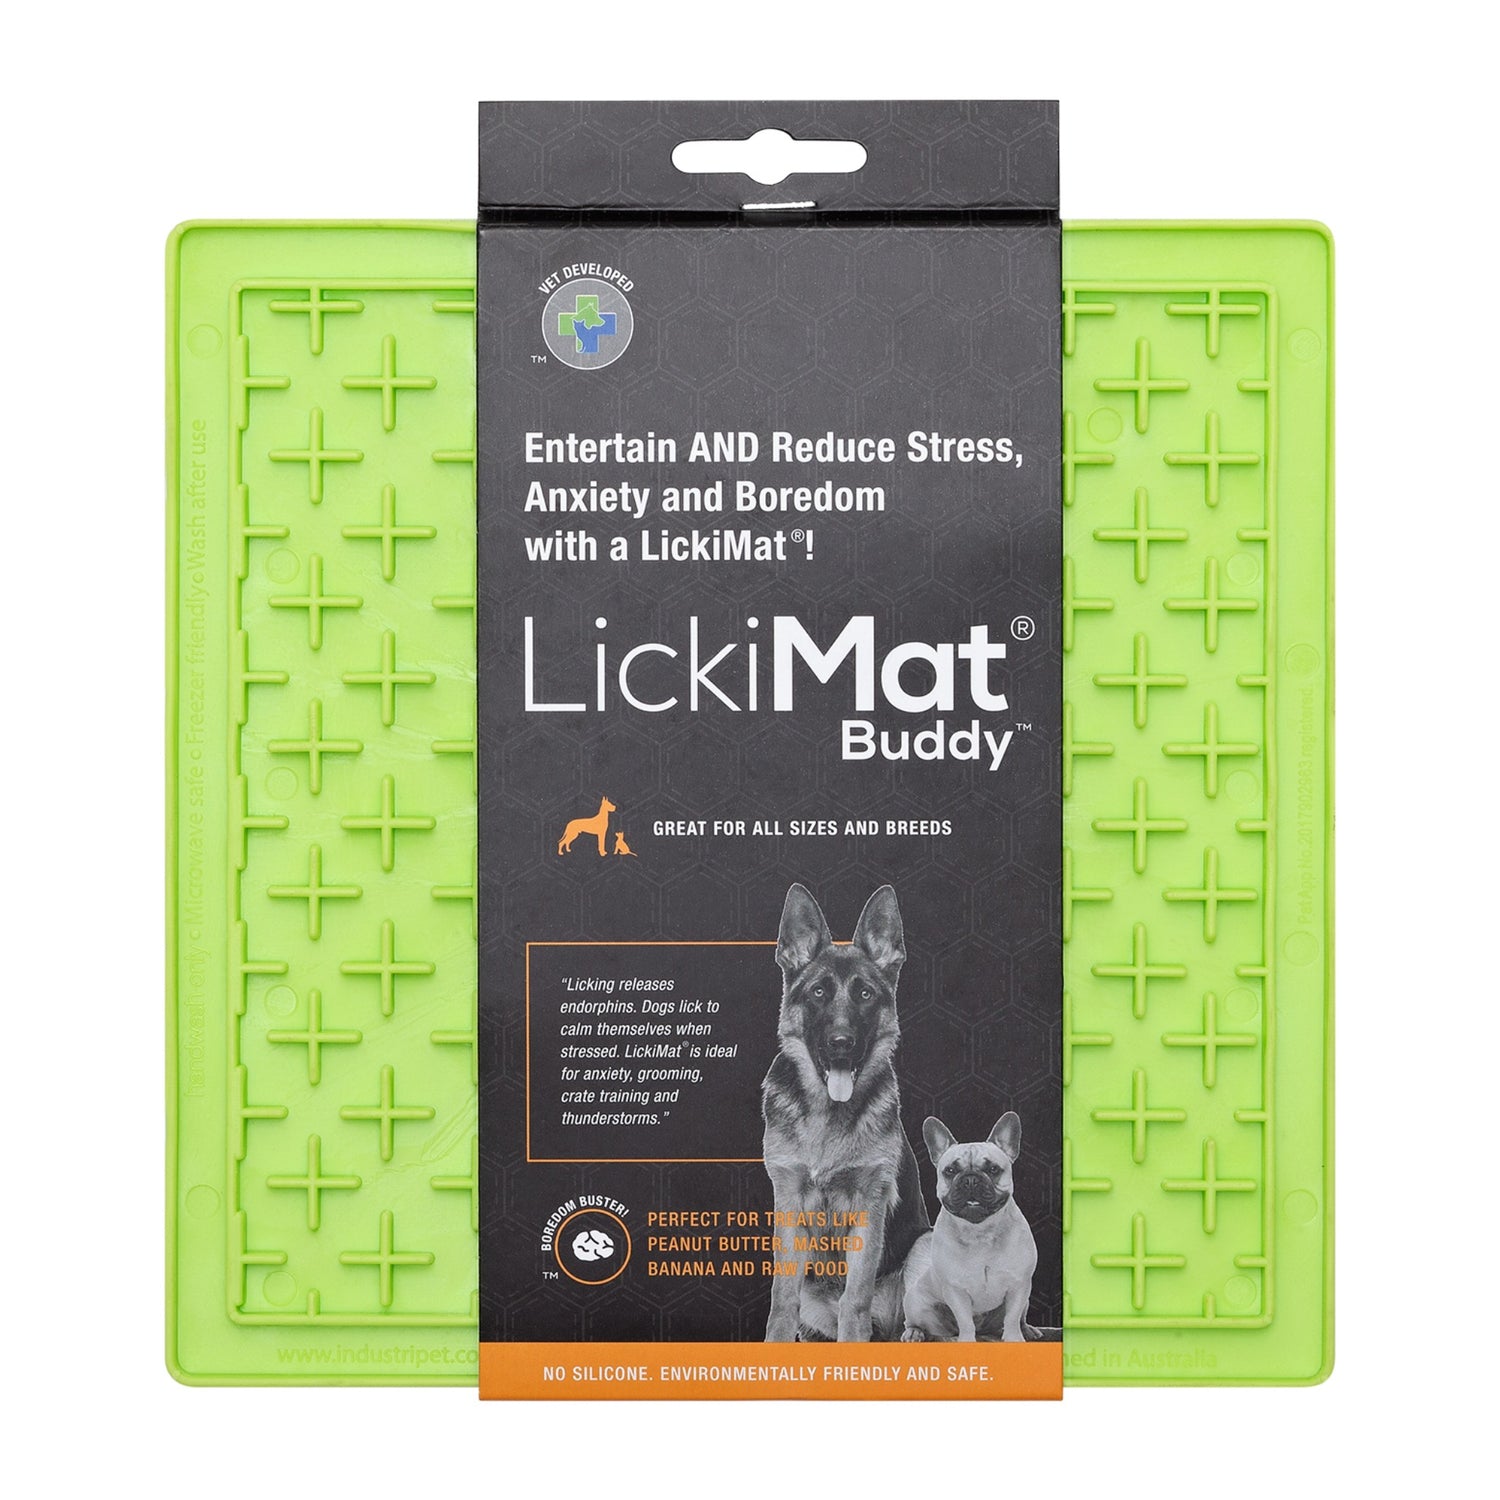 LickiMat Classic Buddy, alfombrilla para lamer para perros